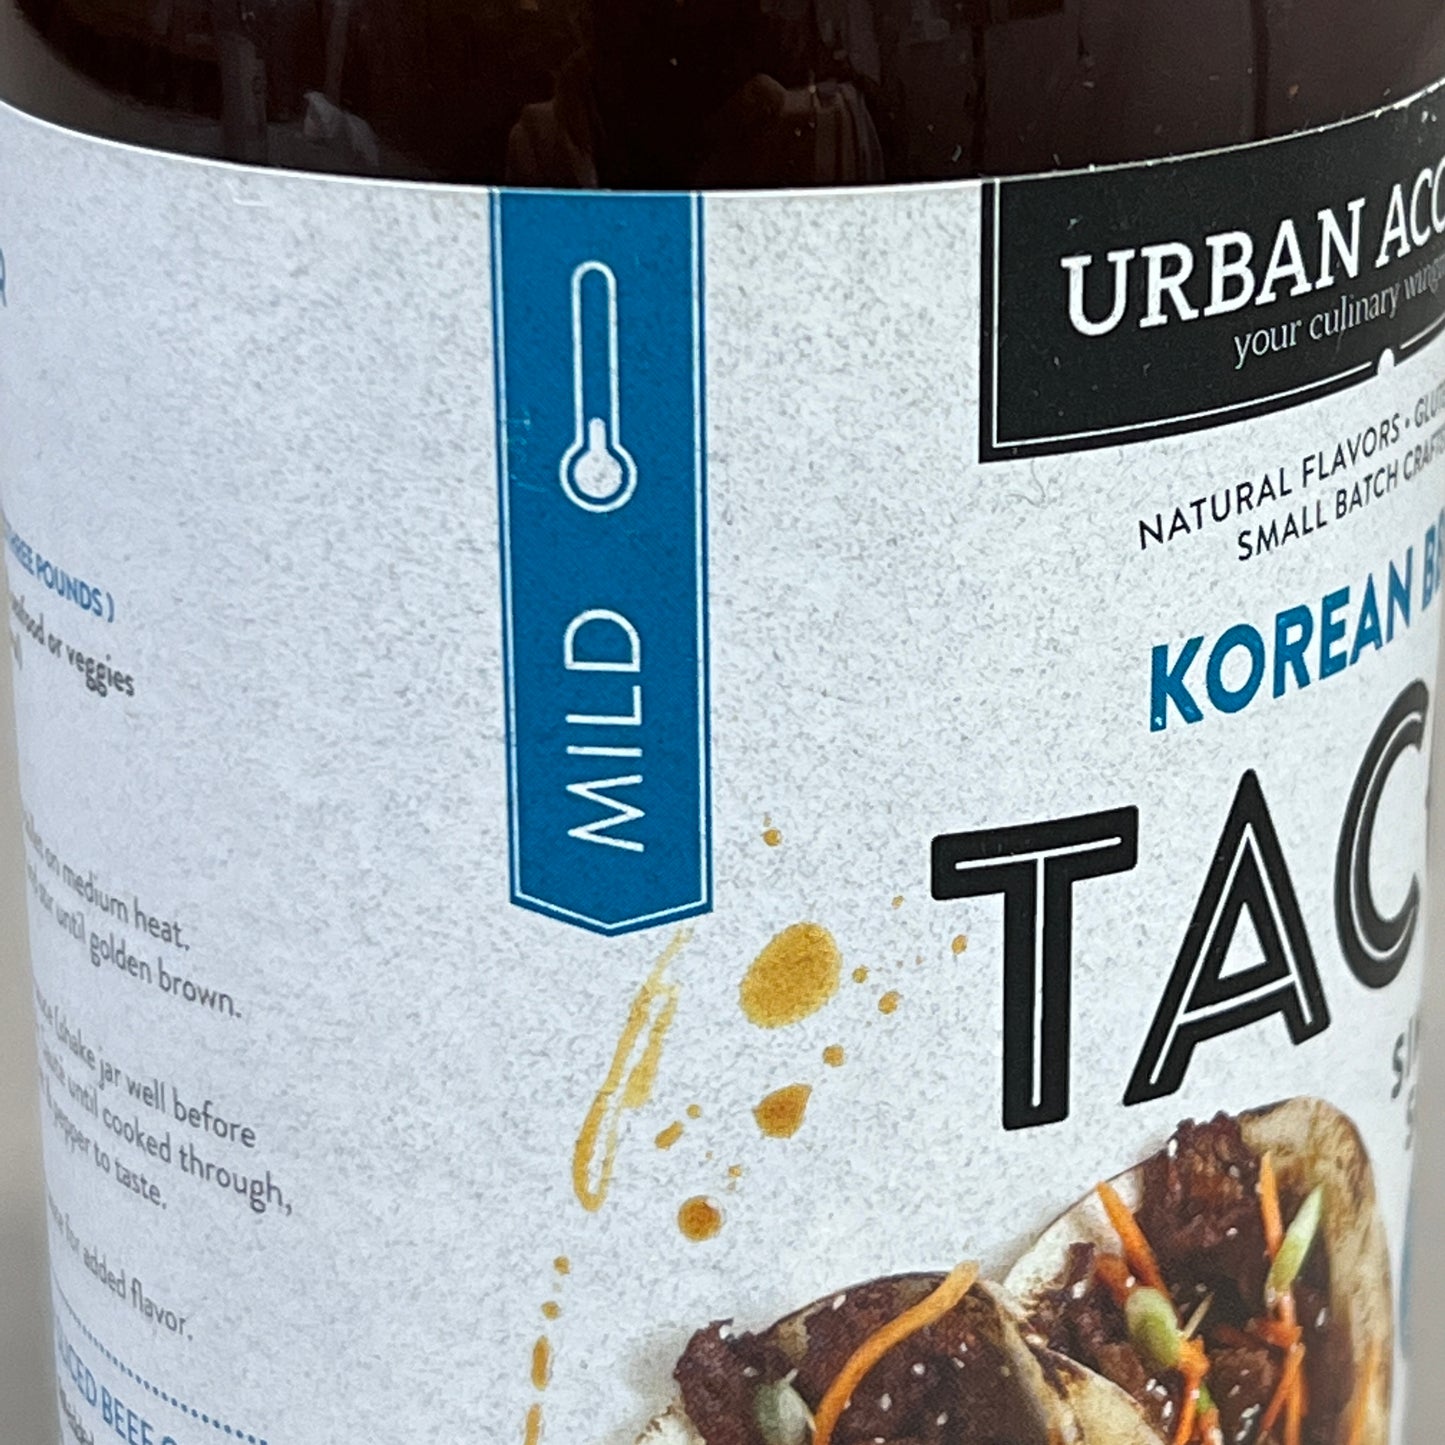 URBAN ACCENTS 2-PACK Mild Korean Barbecue Taco Simmer Sauce 14.3 oz GF 02/24 QURA4E31 (New)